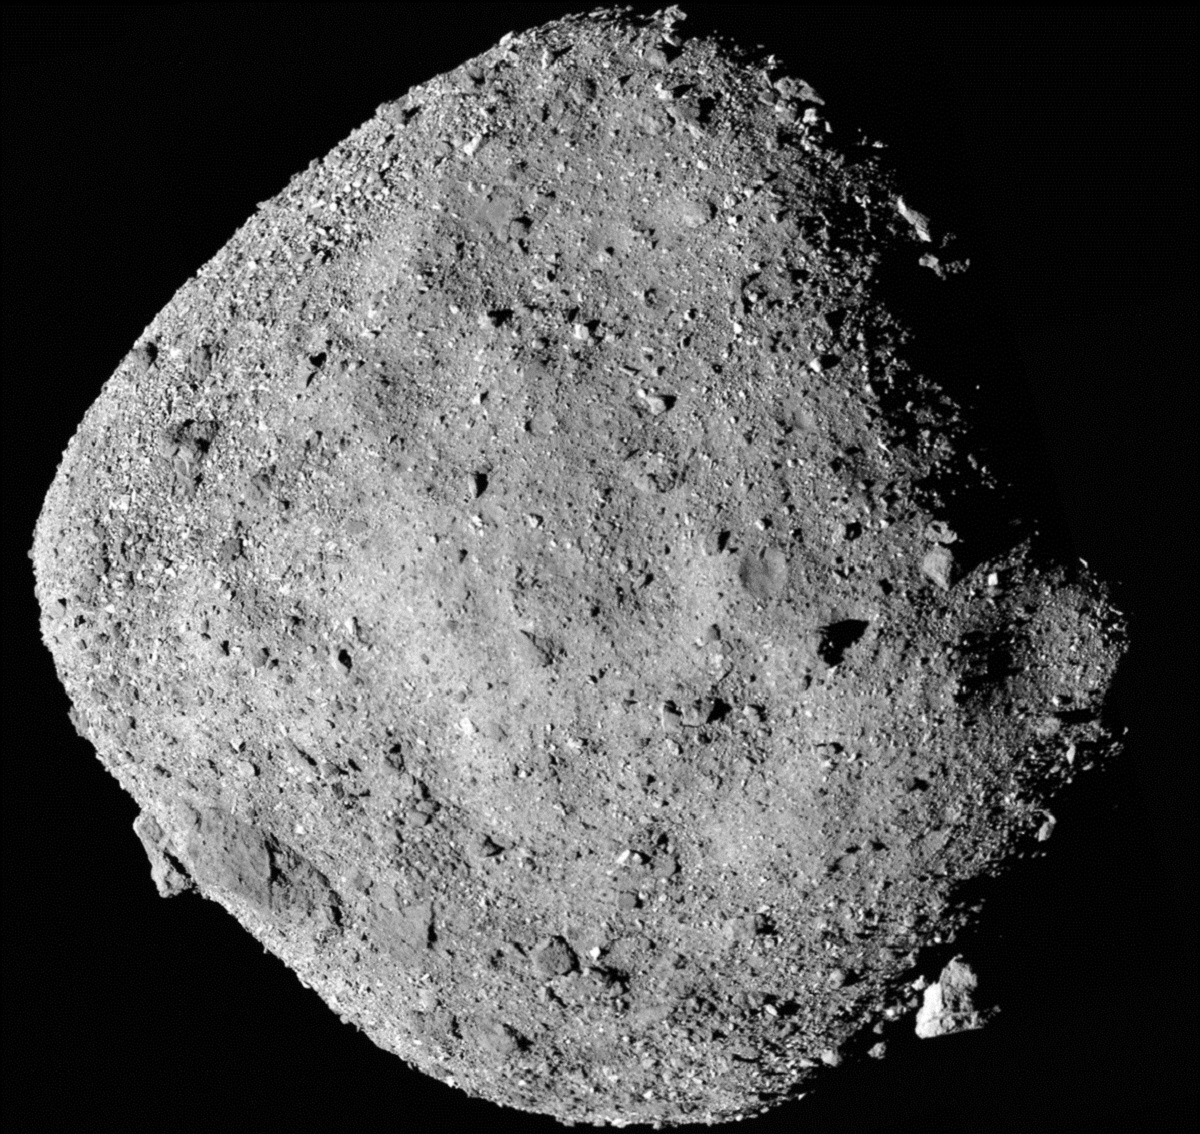 Asteroide Bennu impatto Terra studio NASA data 